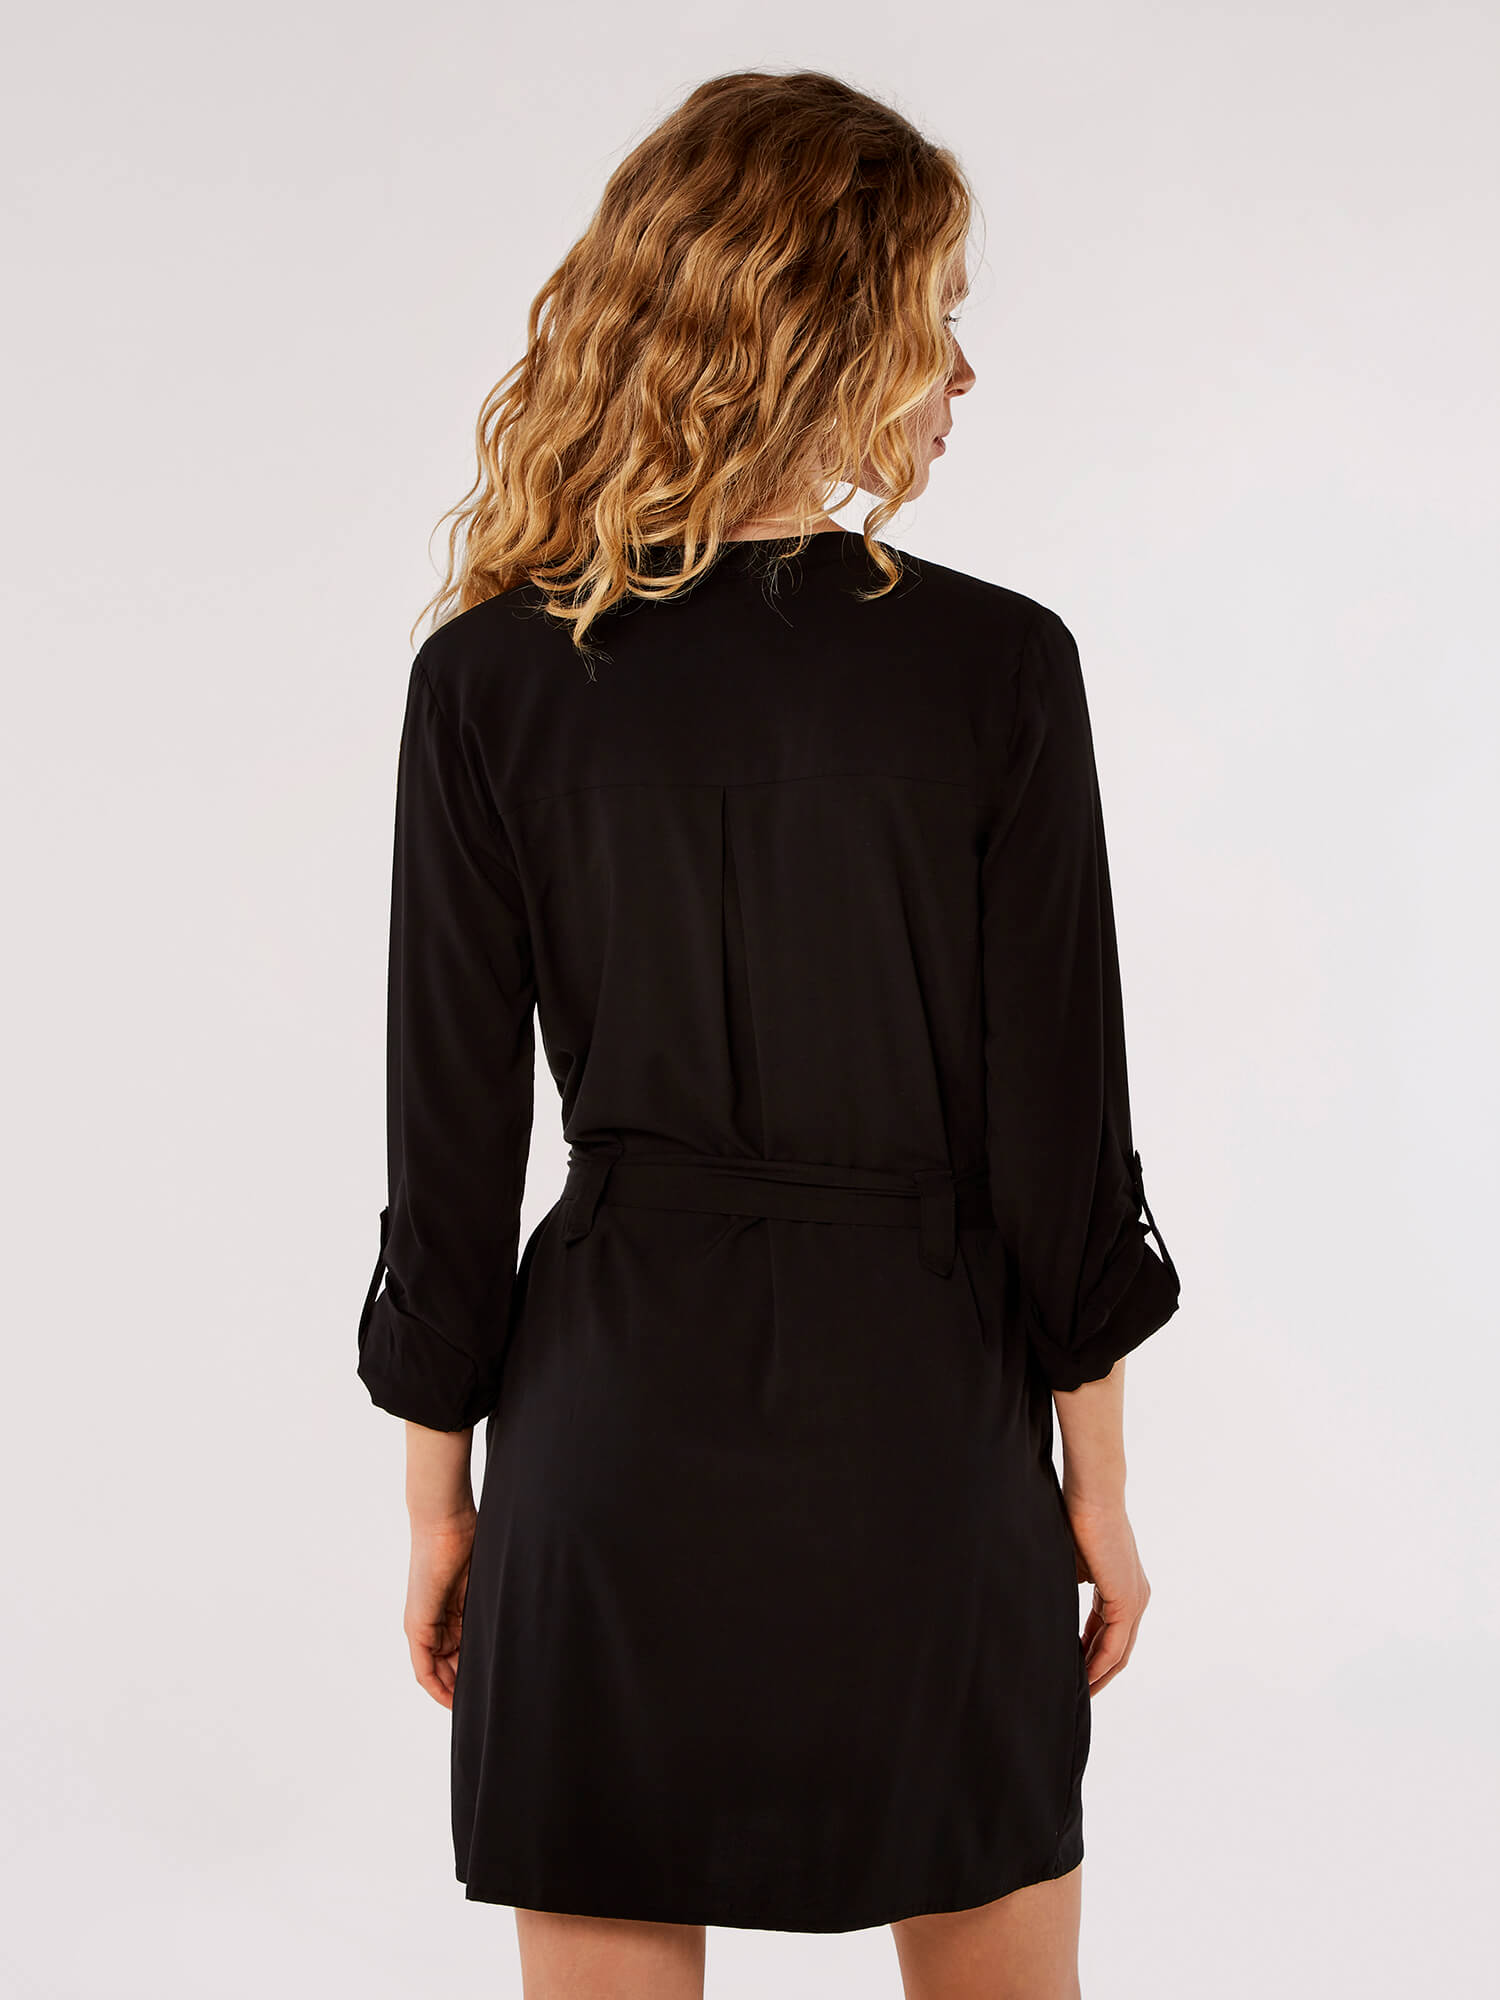 Apricot 780132 black shirt dress